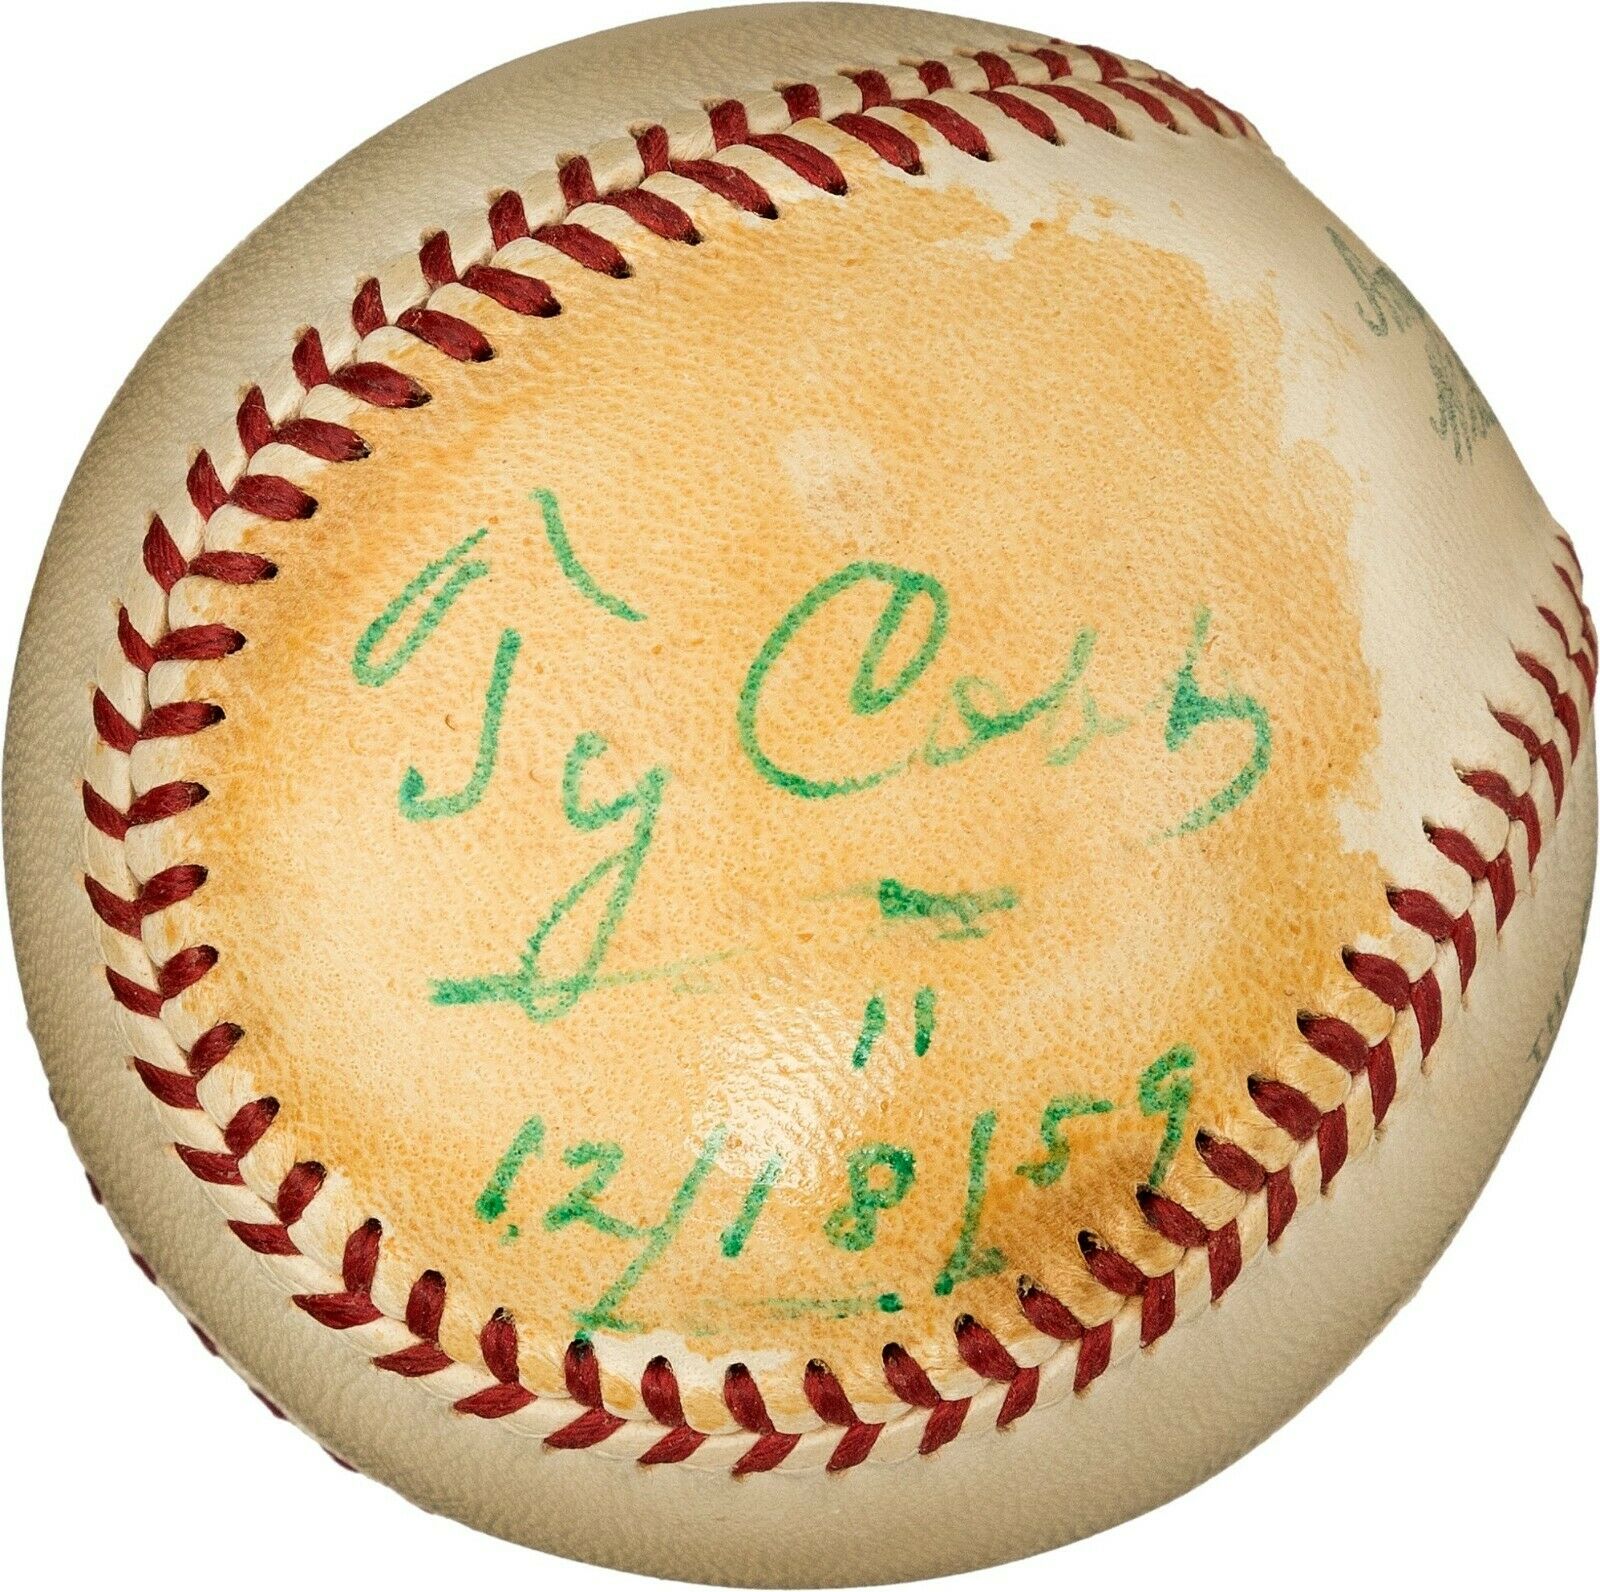 Beautiful 1959 St. Louis Cardinals Team Signed Baseball 24 Sigs